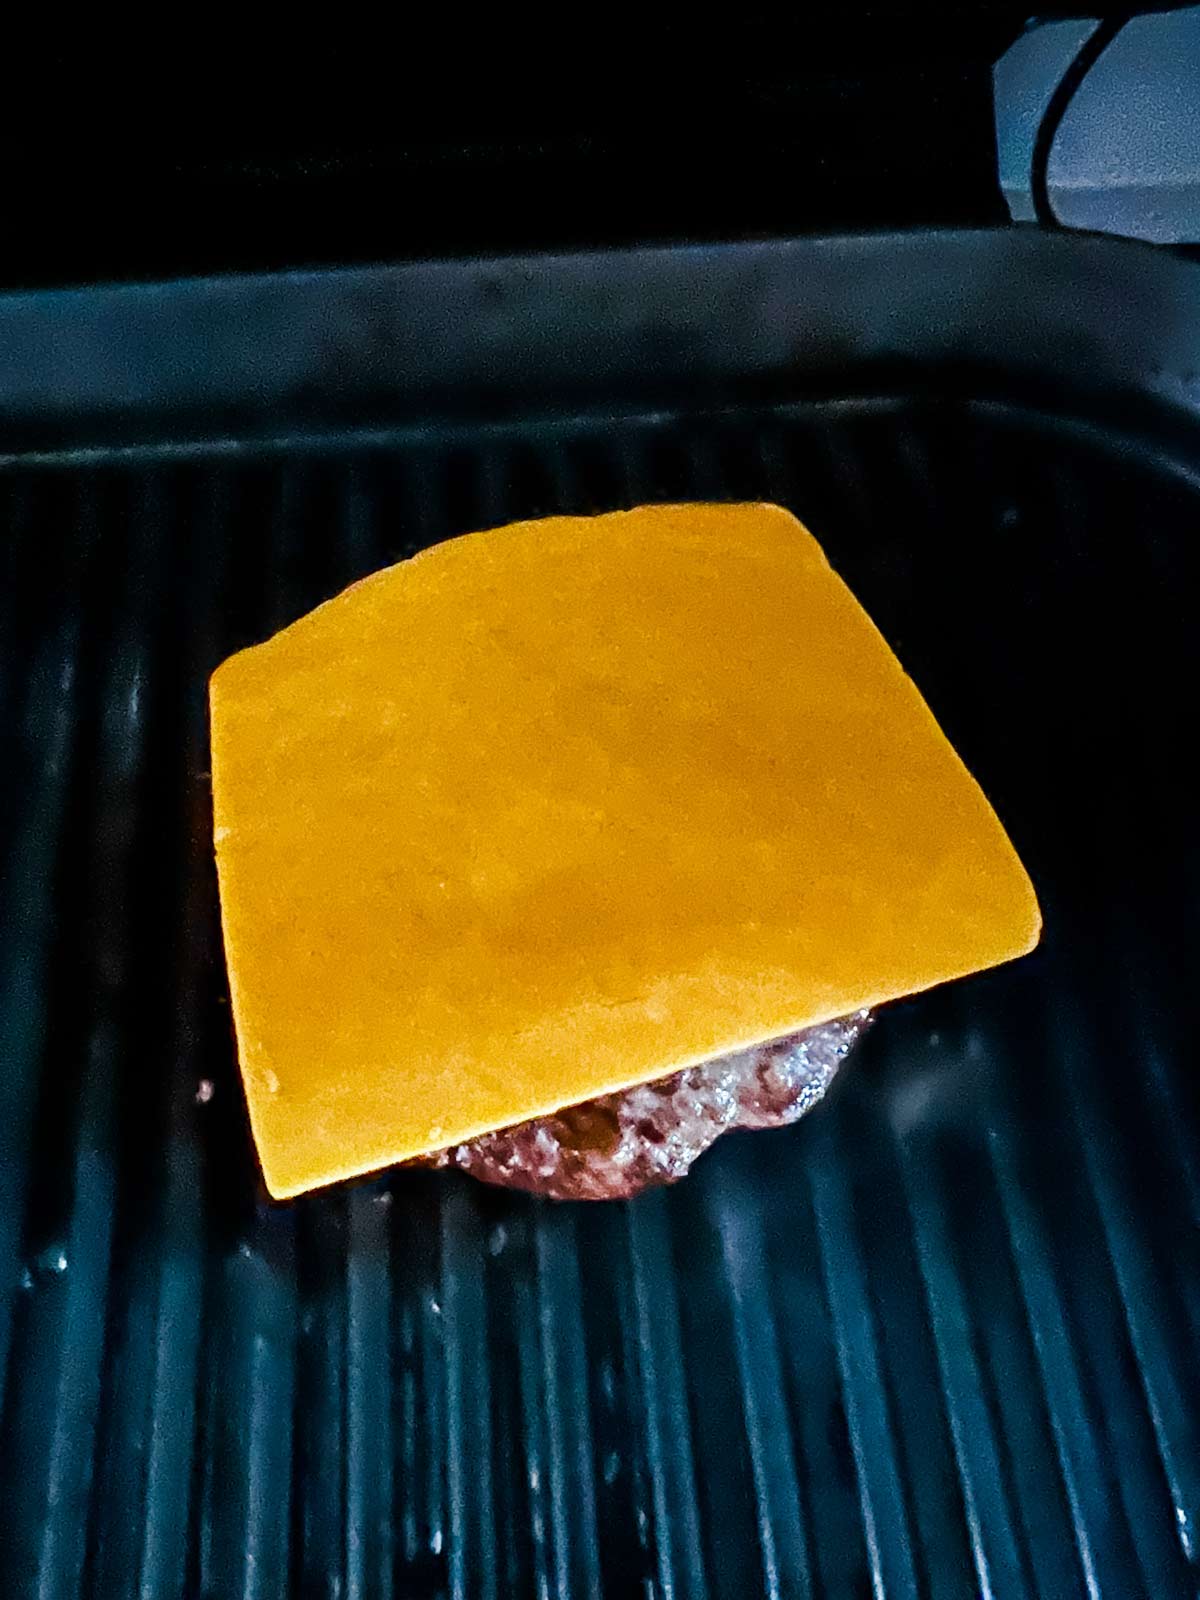 Cheese on top of a burger on a Ninja Foodi grill.